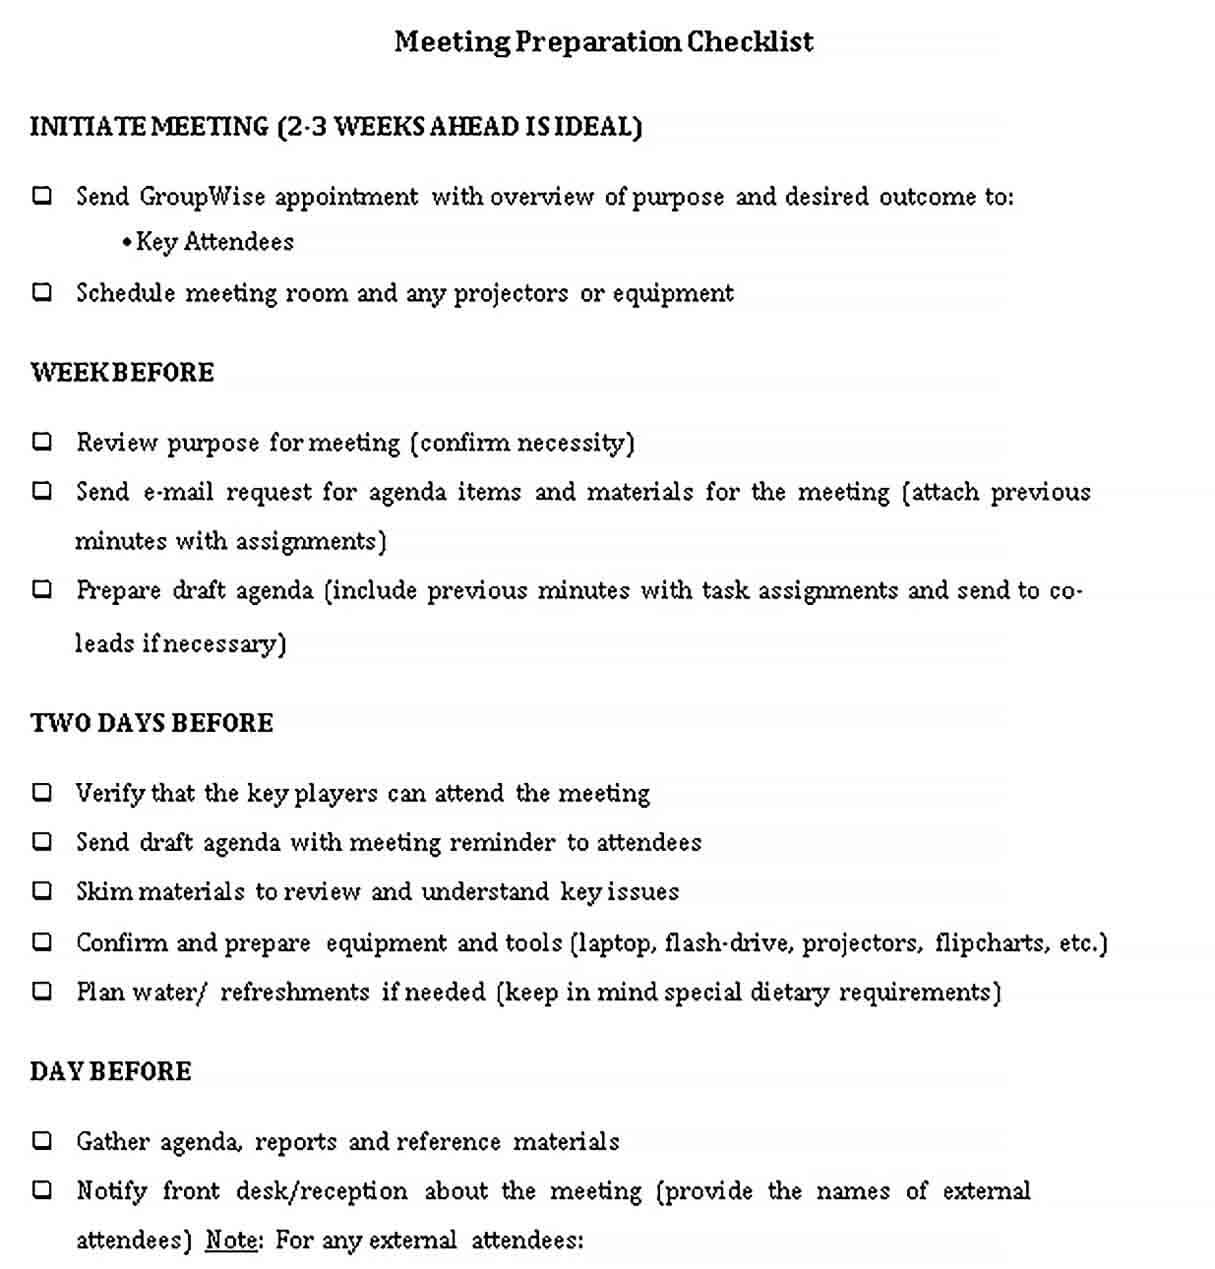 Sample Meeting Preparation Checklist Template